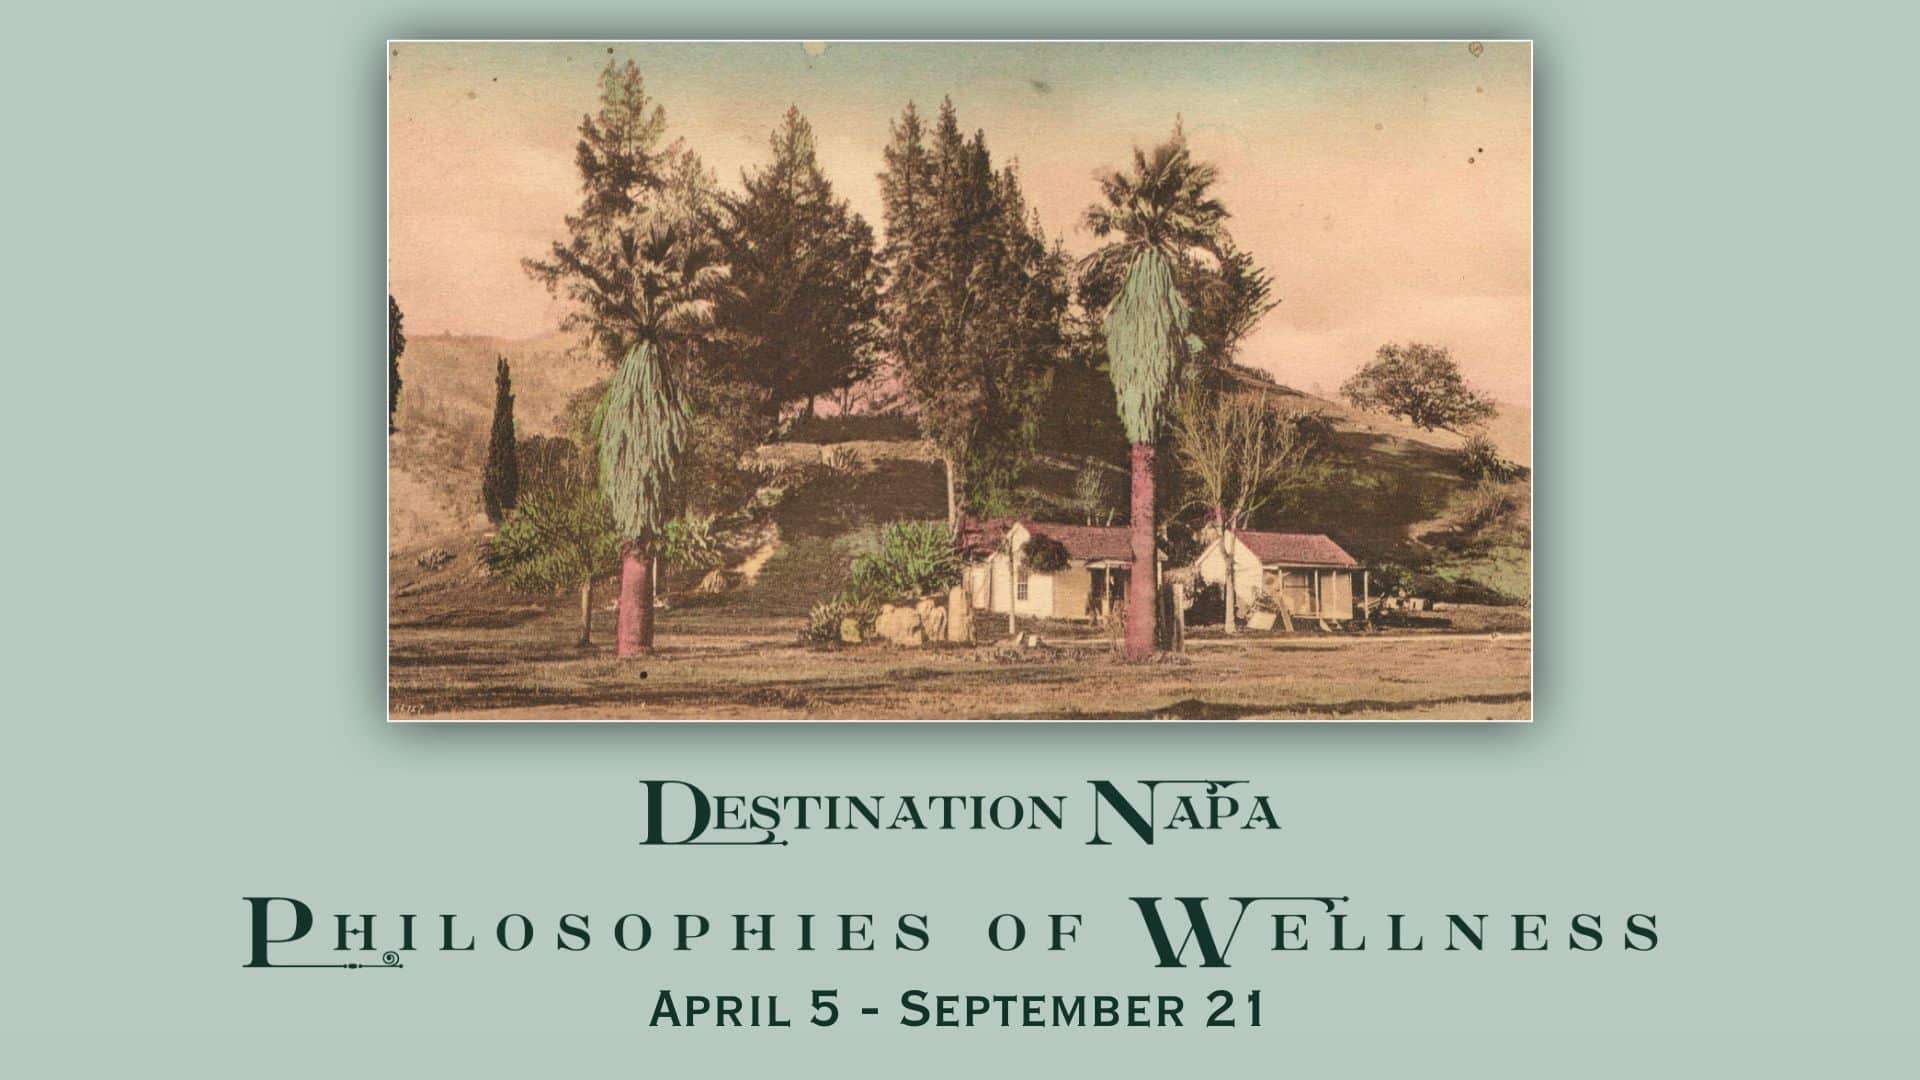 Destination Napa: Philosophies of Wellness, April 5-September 21